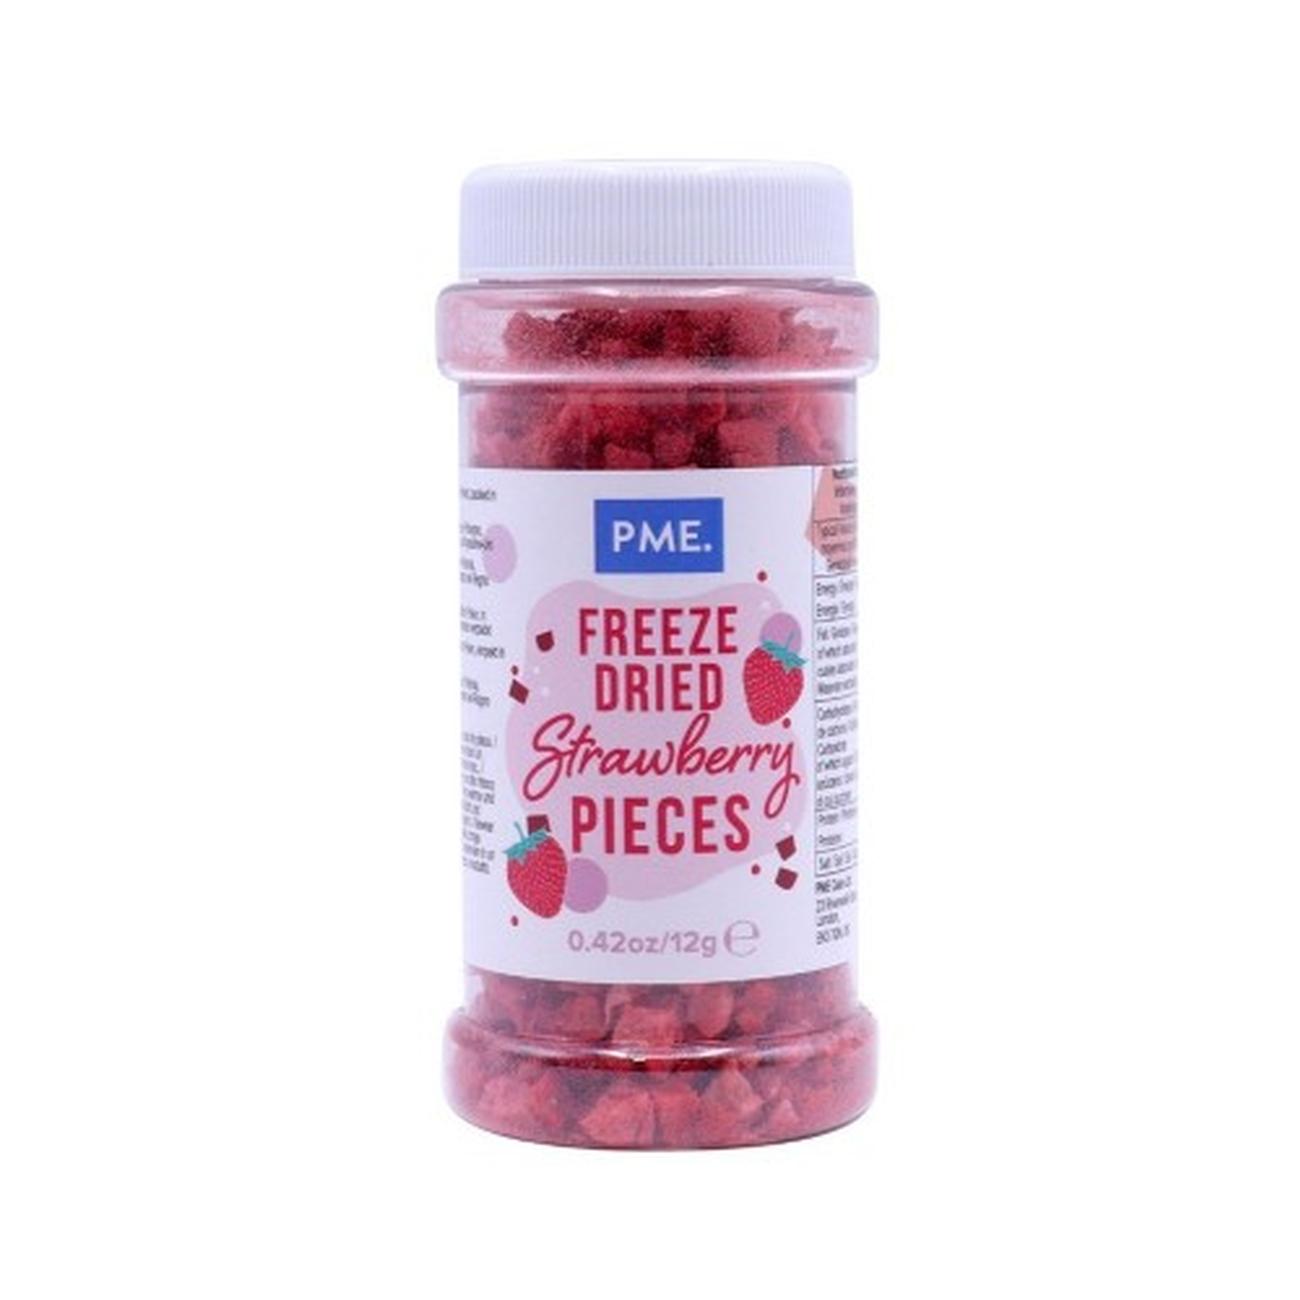 pme-freeze-dried-strawberries - PME Freeze Dried Strawberries